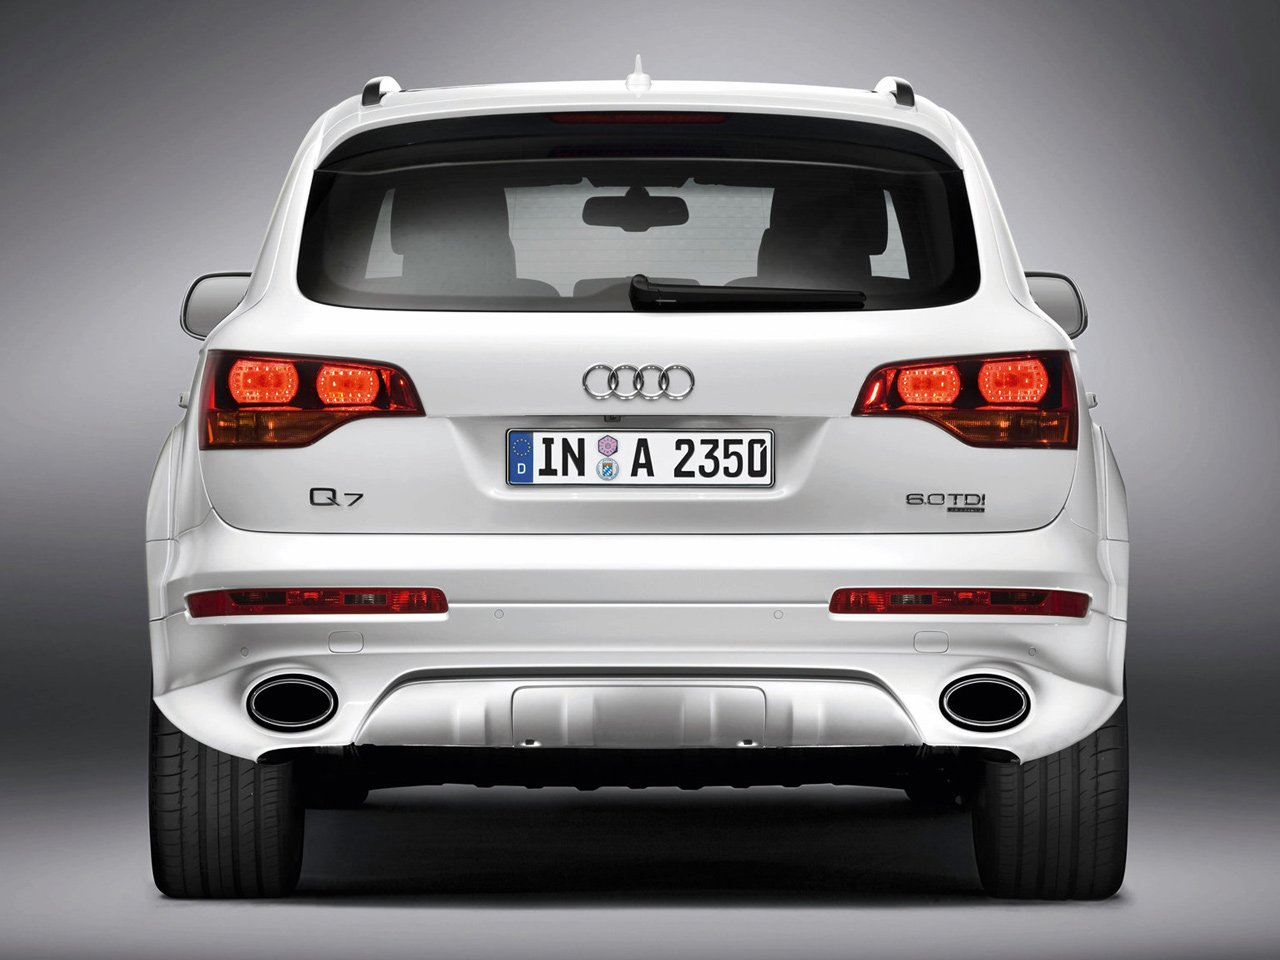 Audi Q7 V12 TDI back